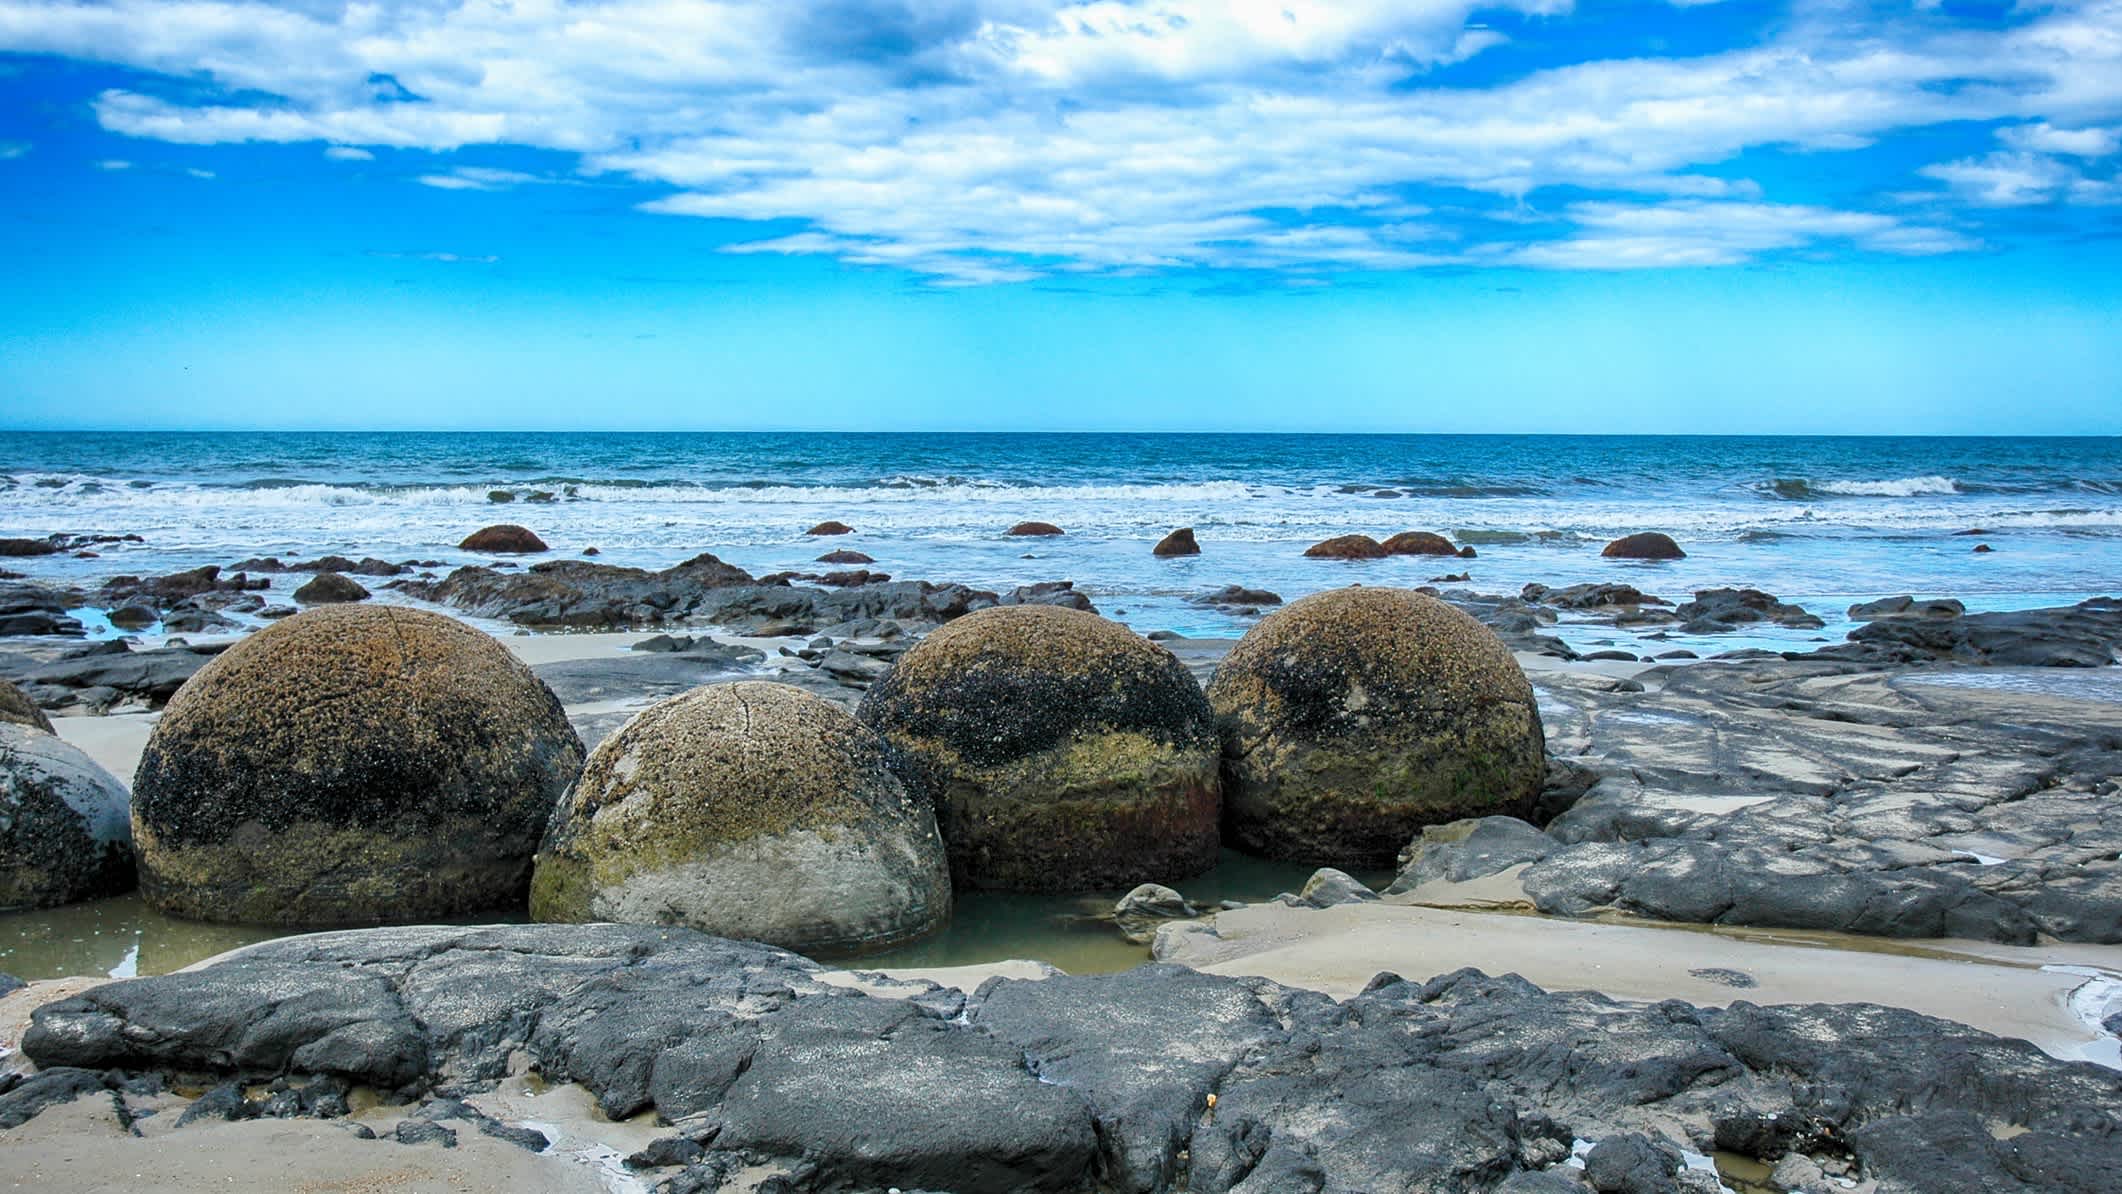 Moeraki Boulders on Koekohe Beach, near Oamaru, New Zealand.